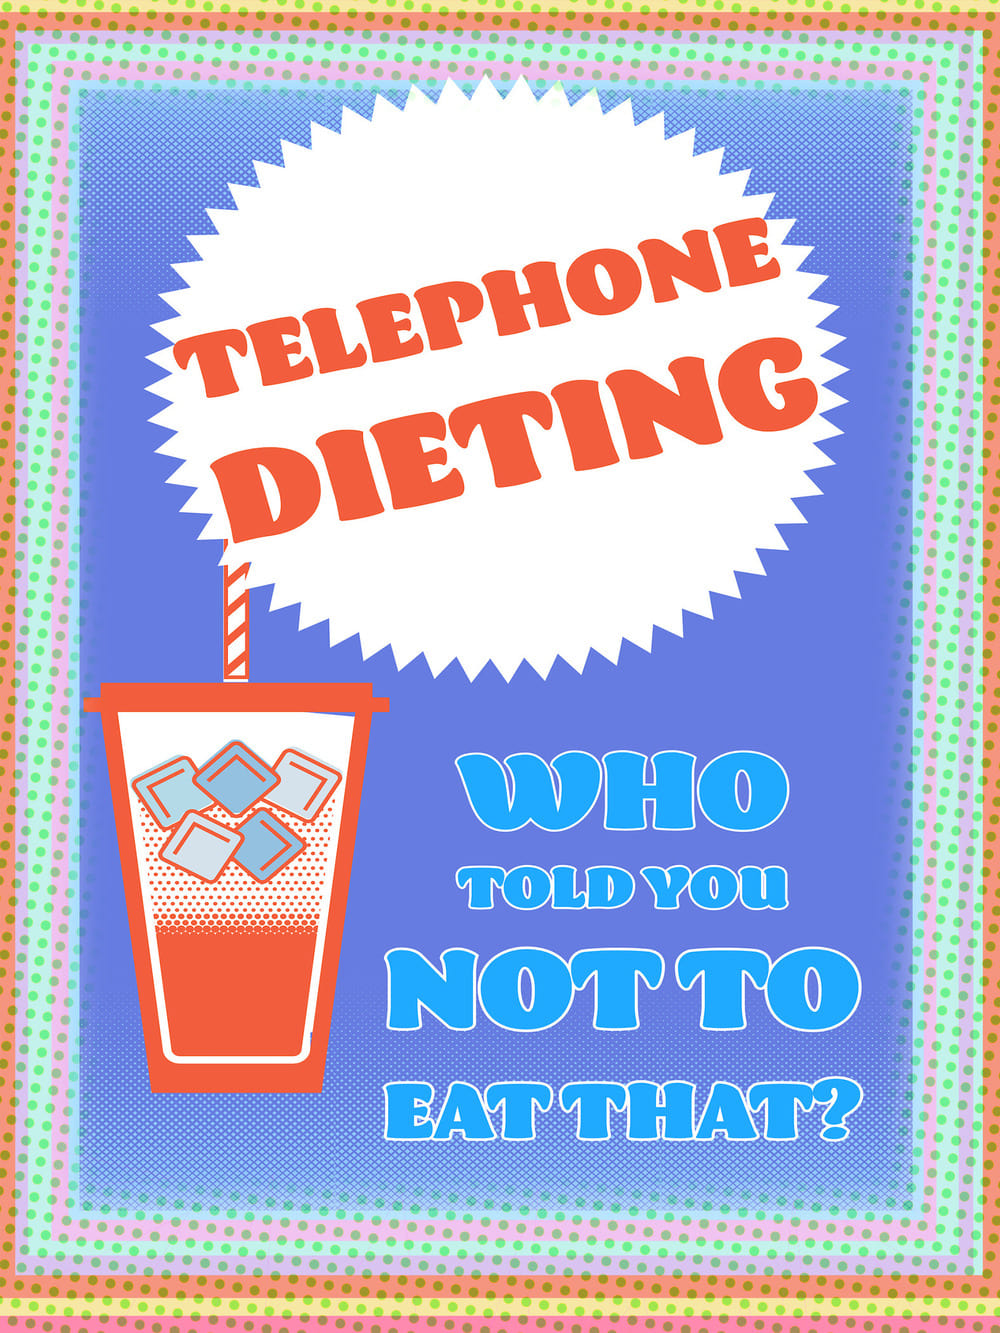 Telephone Dieting